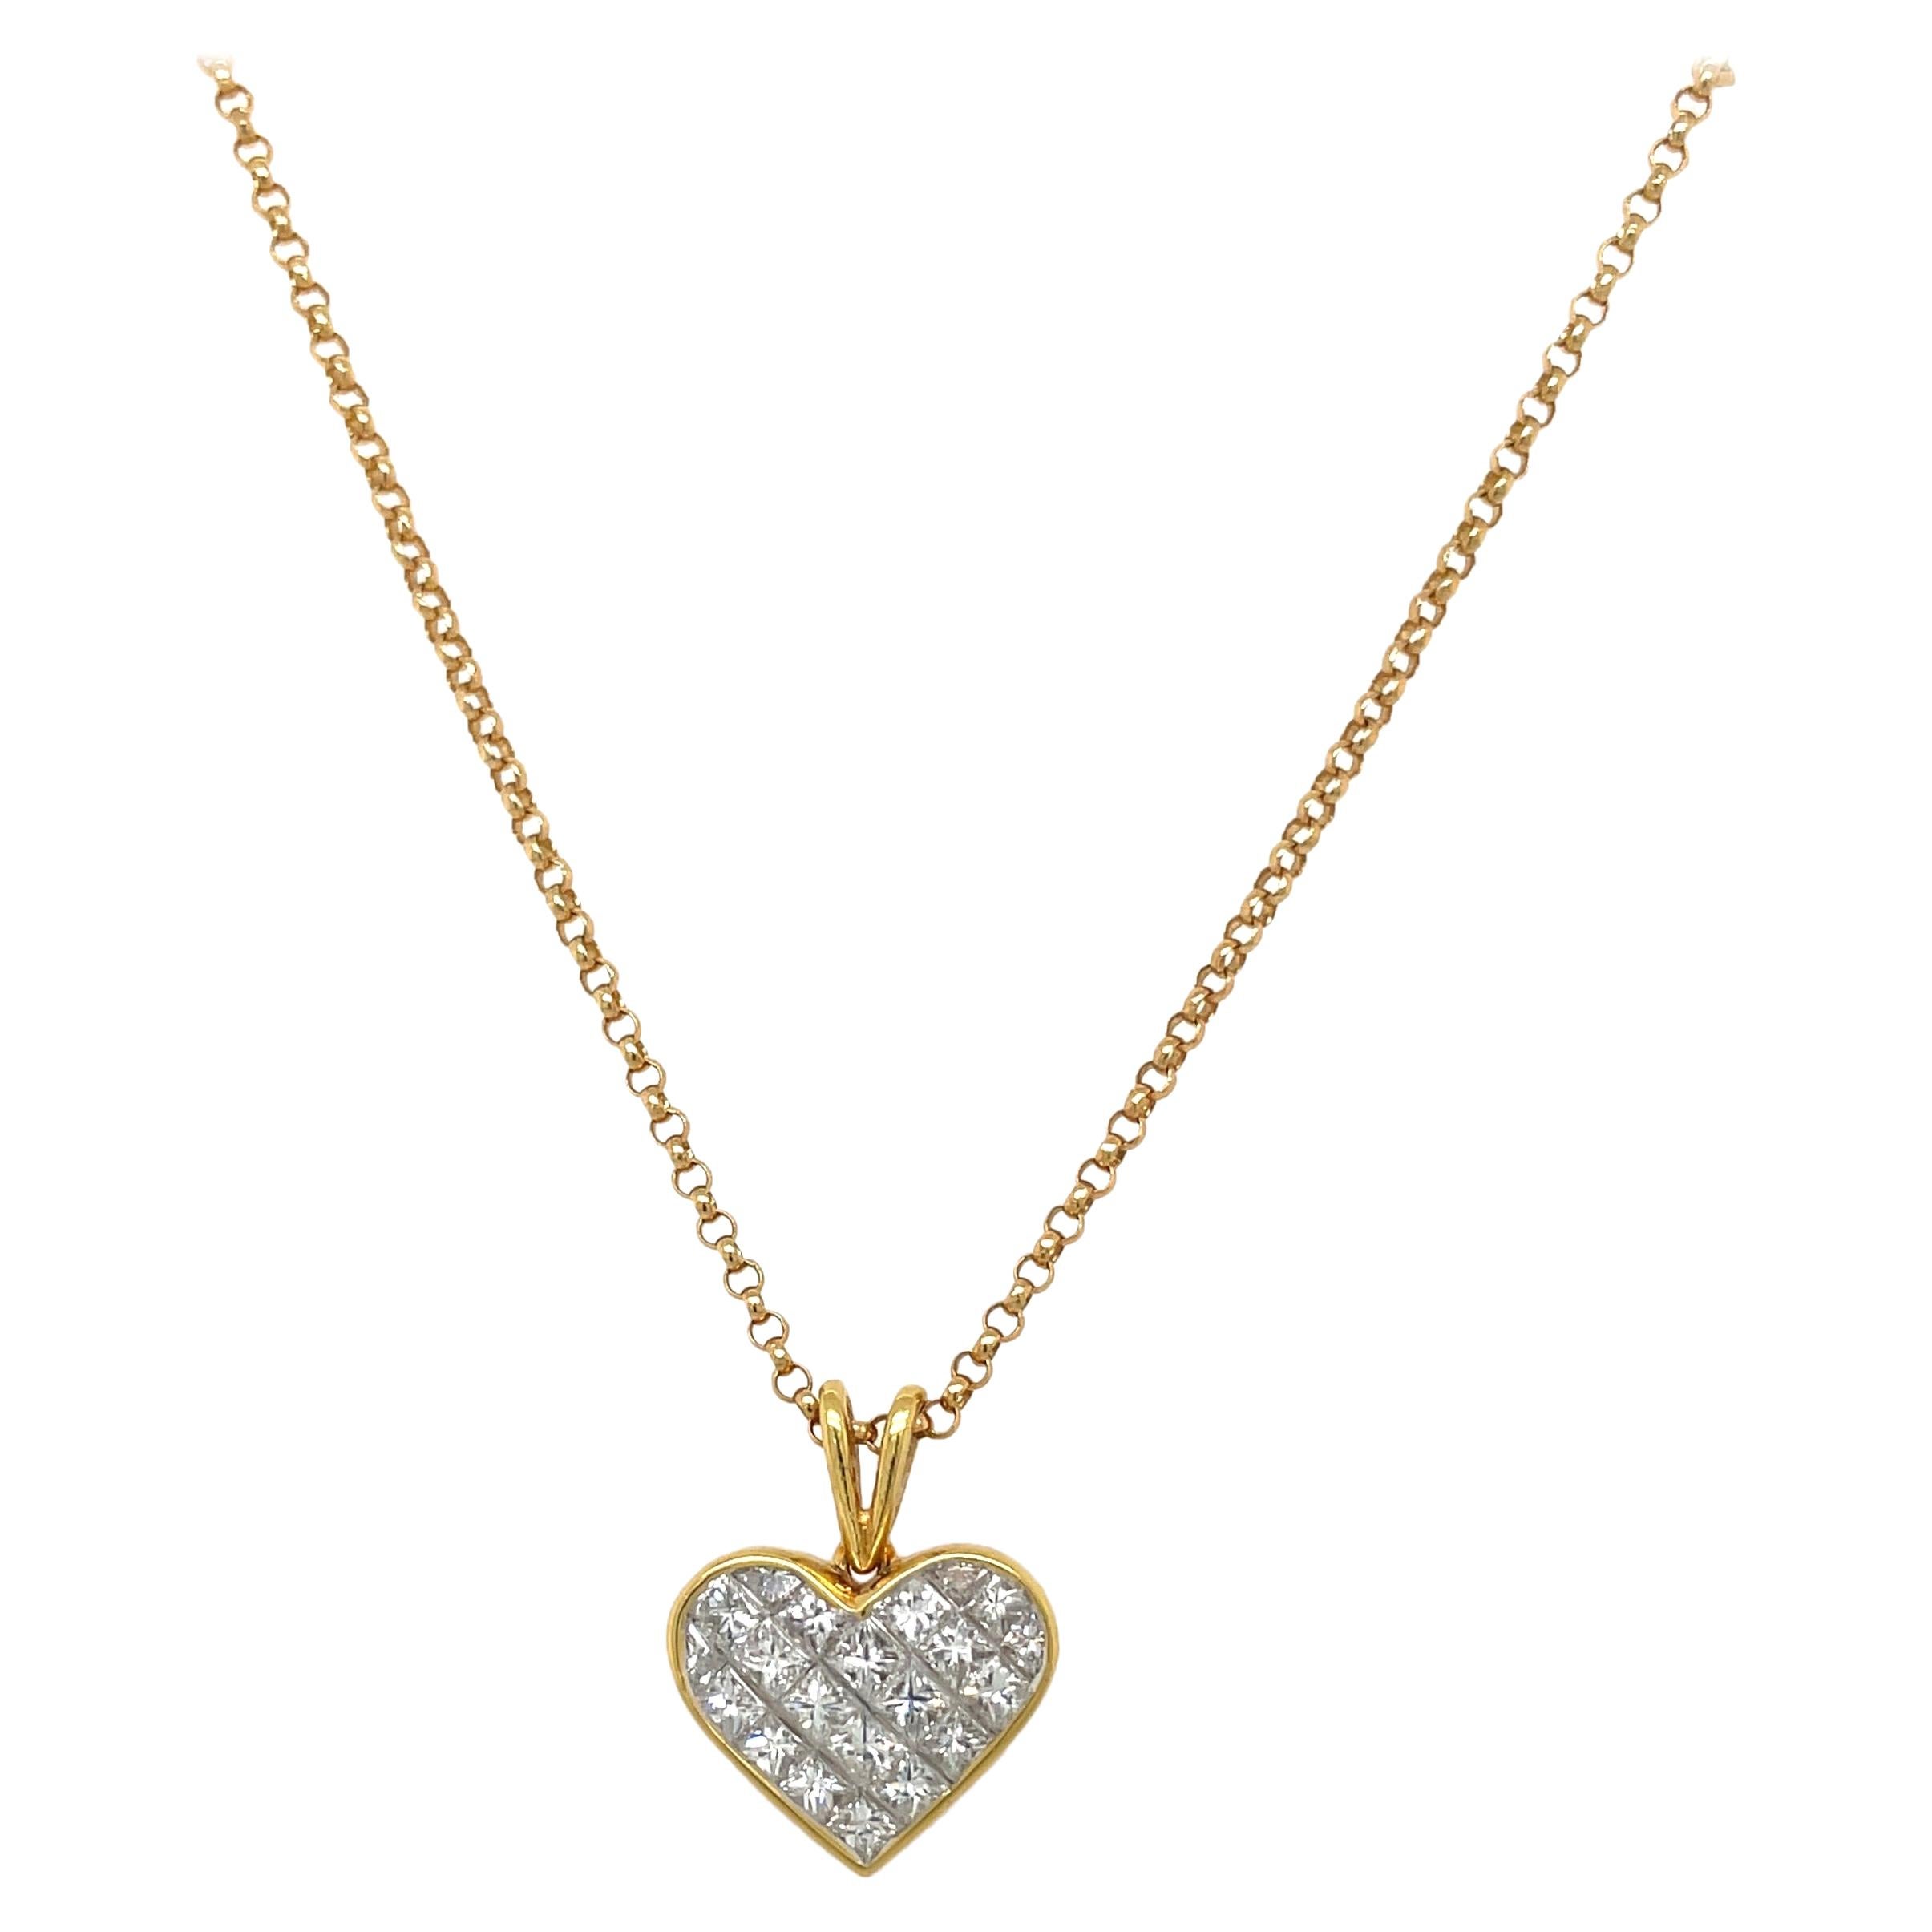 Quadrillion 18kt Yellow Gold 1.19ct Diamond Heart Pendant Necklace